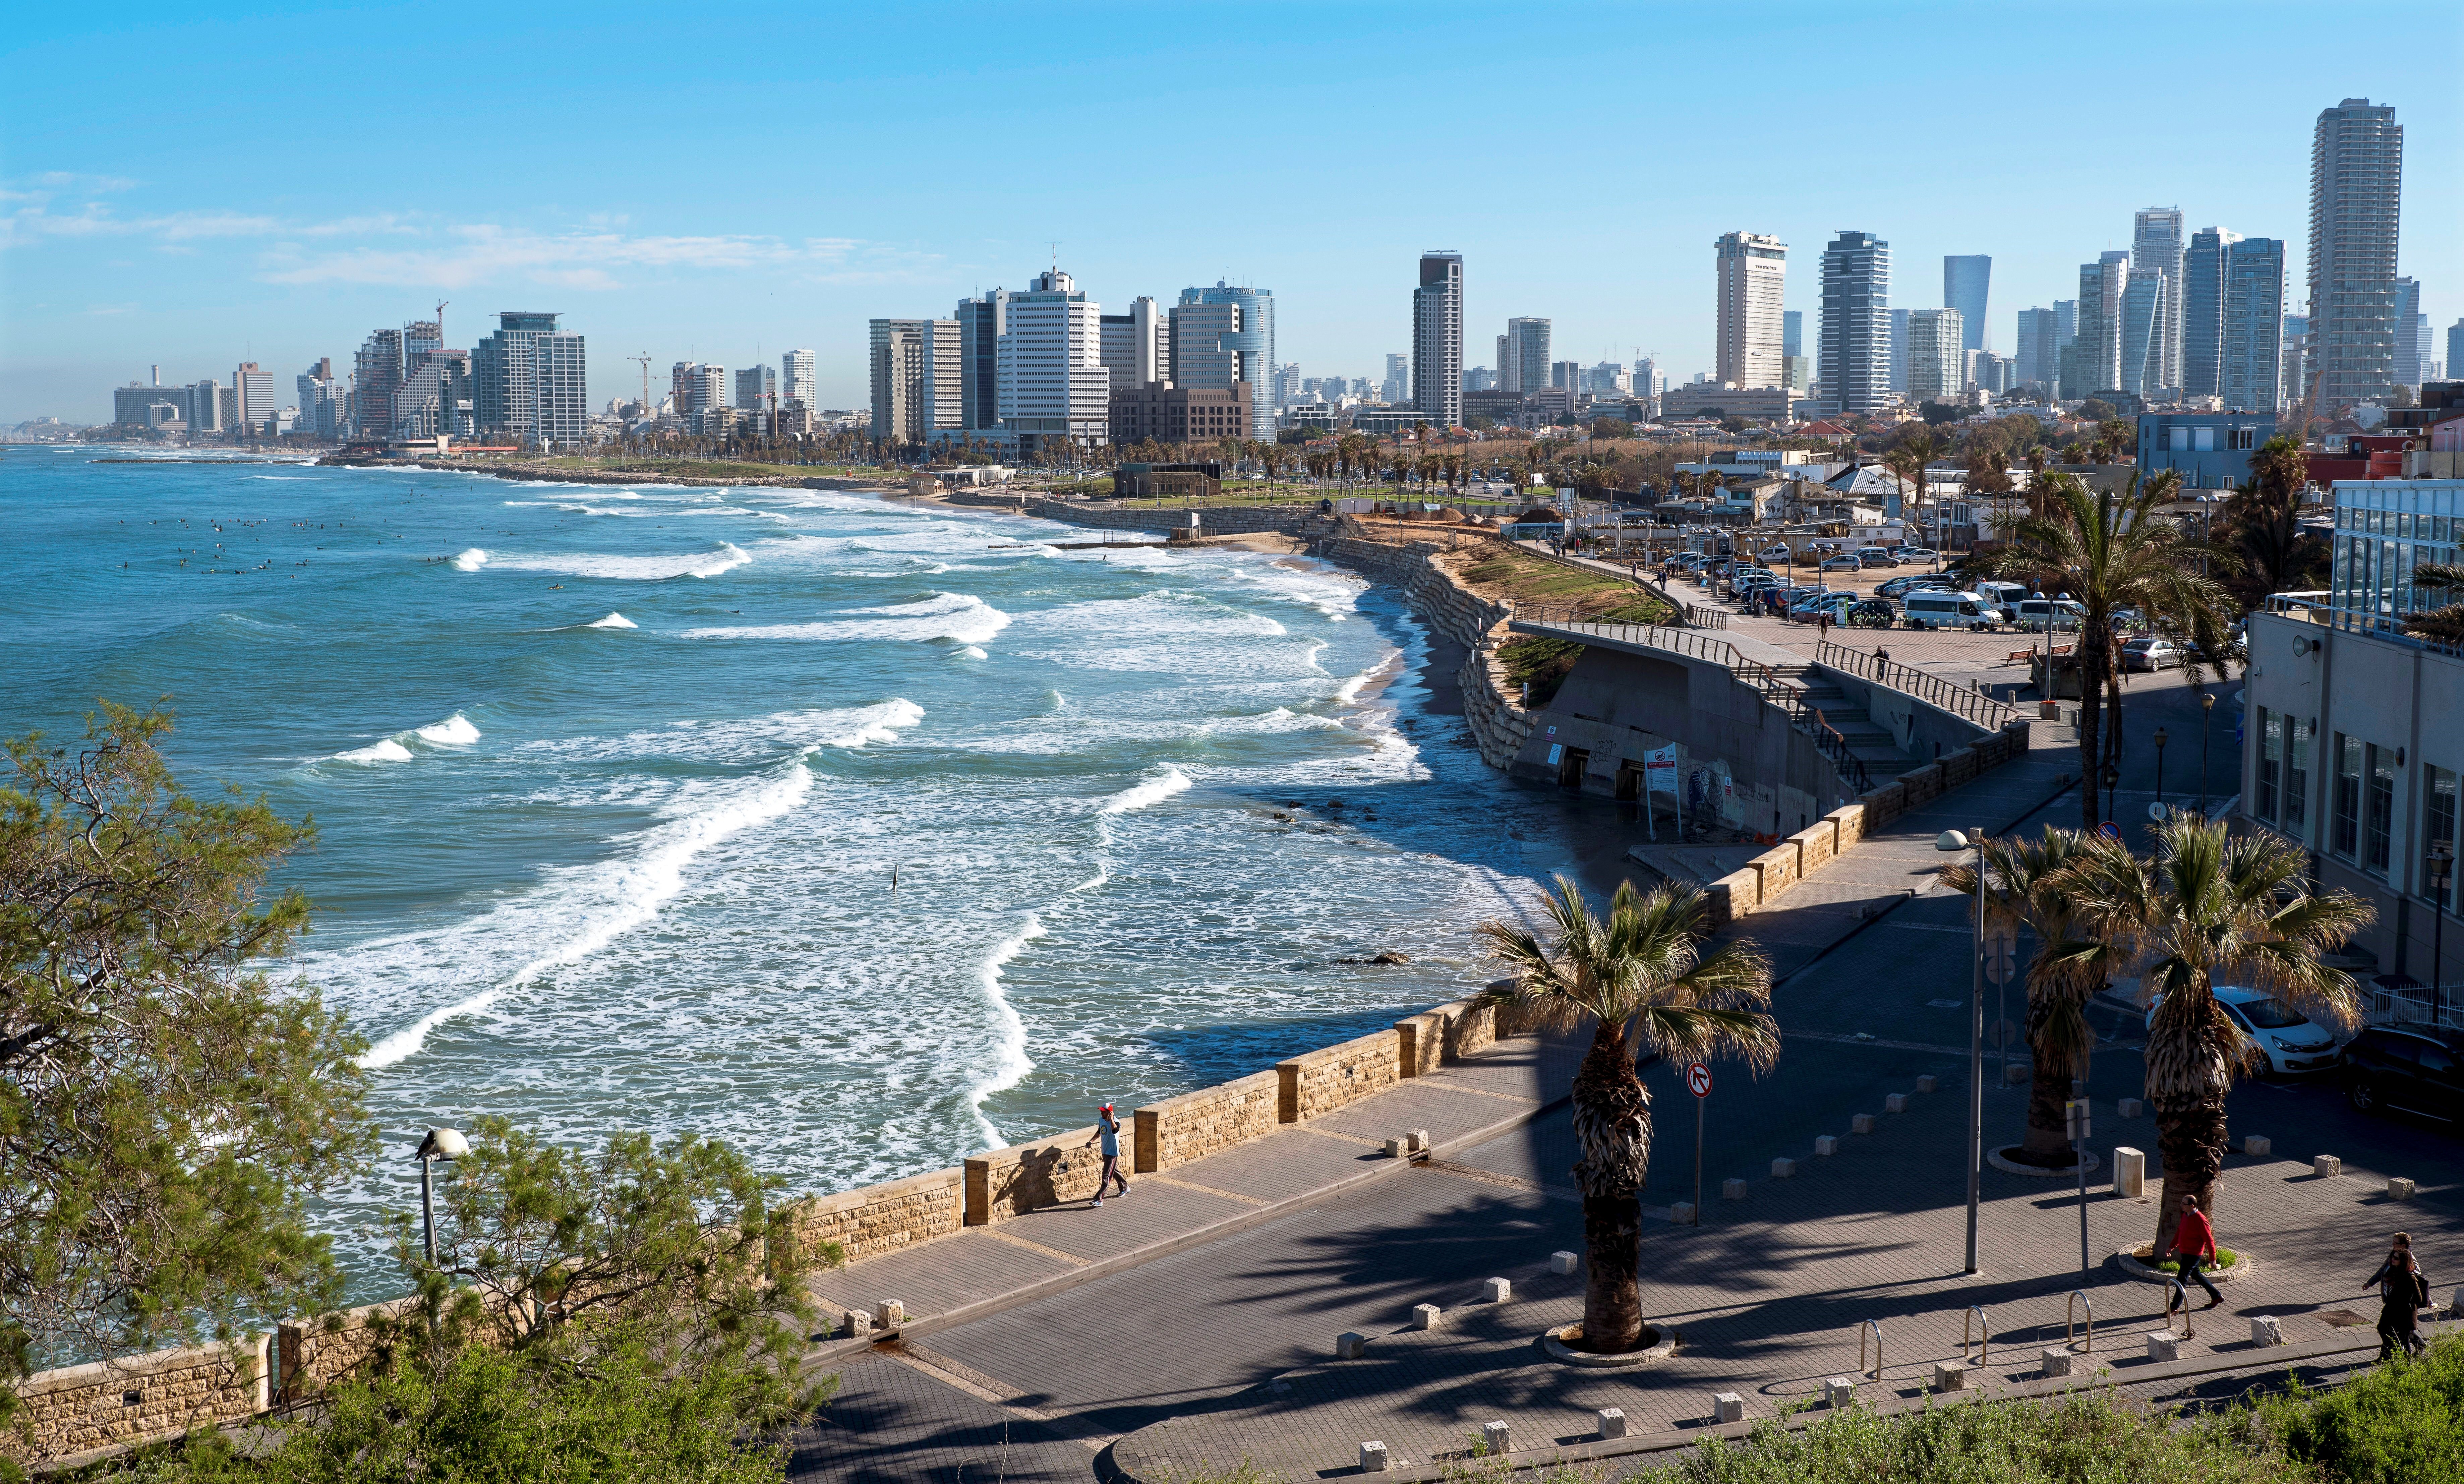 Tel Aviv, Israel (EFE)
